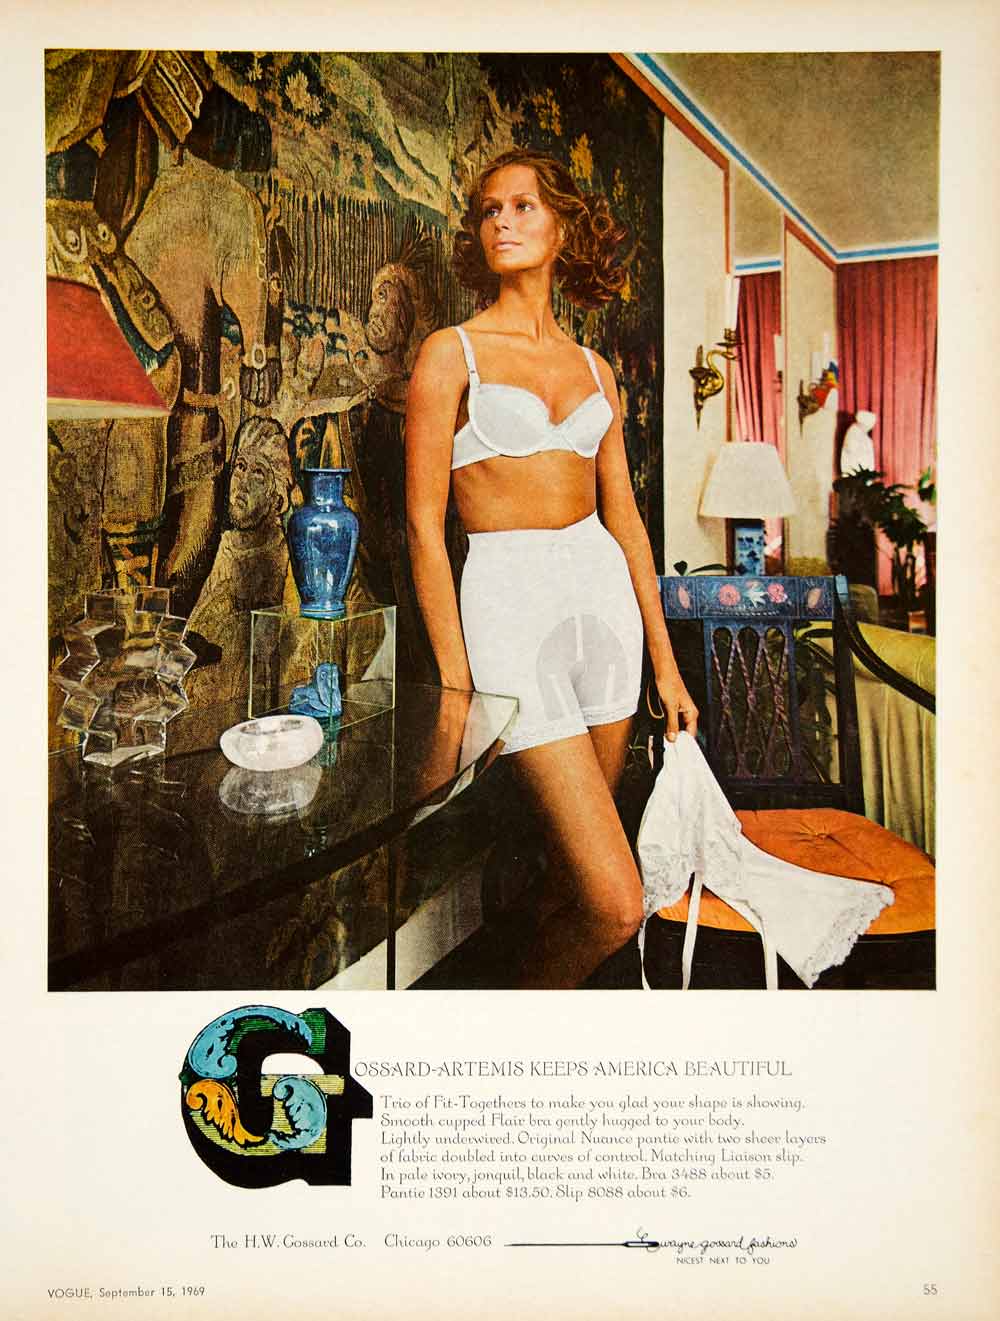 1969 Ad Vintage Grossard Artemis Lingerie Bra Brassiere Panty Girdle Slip YMMA1